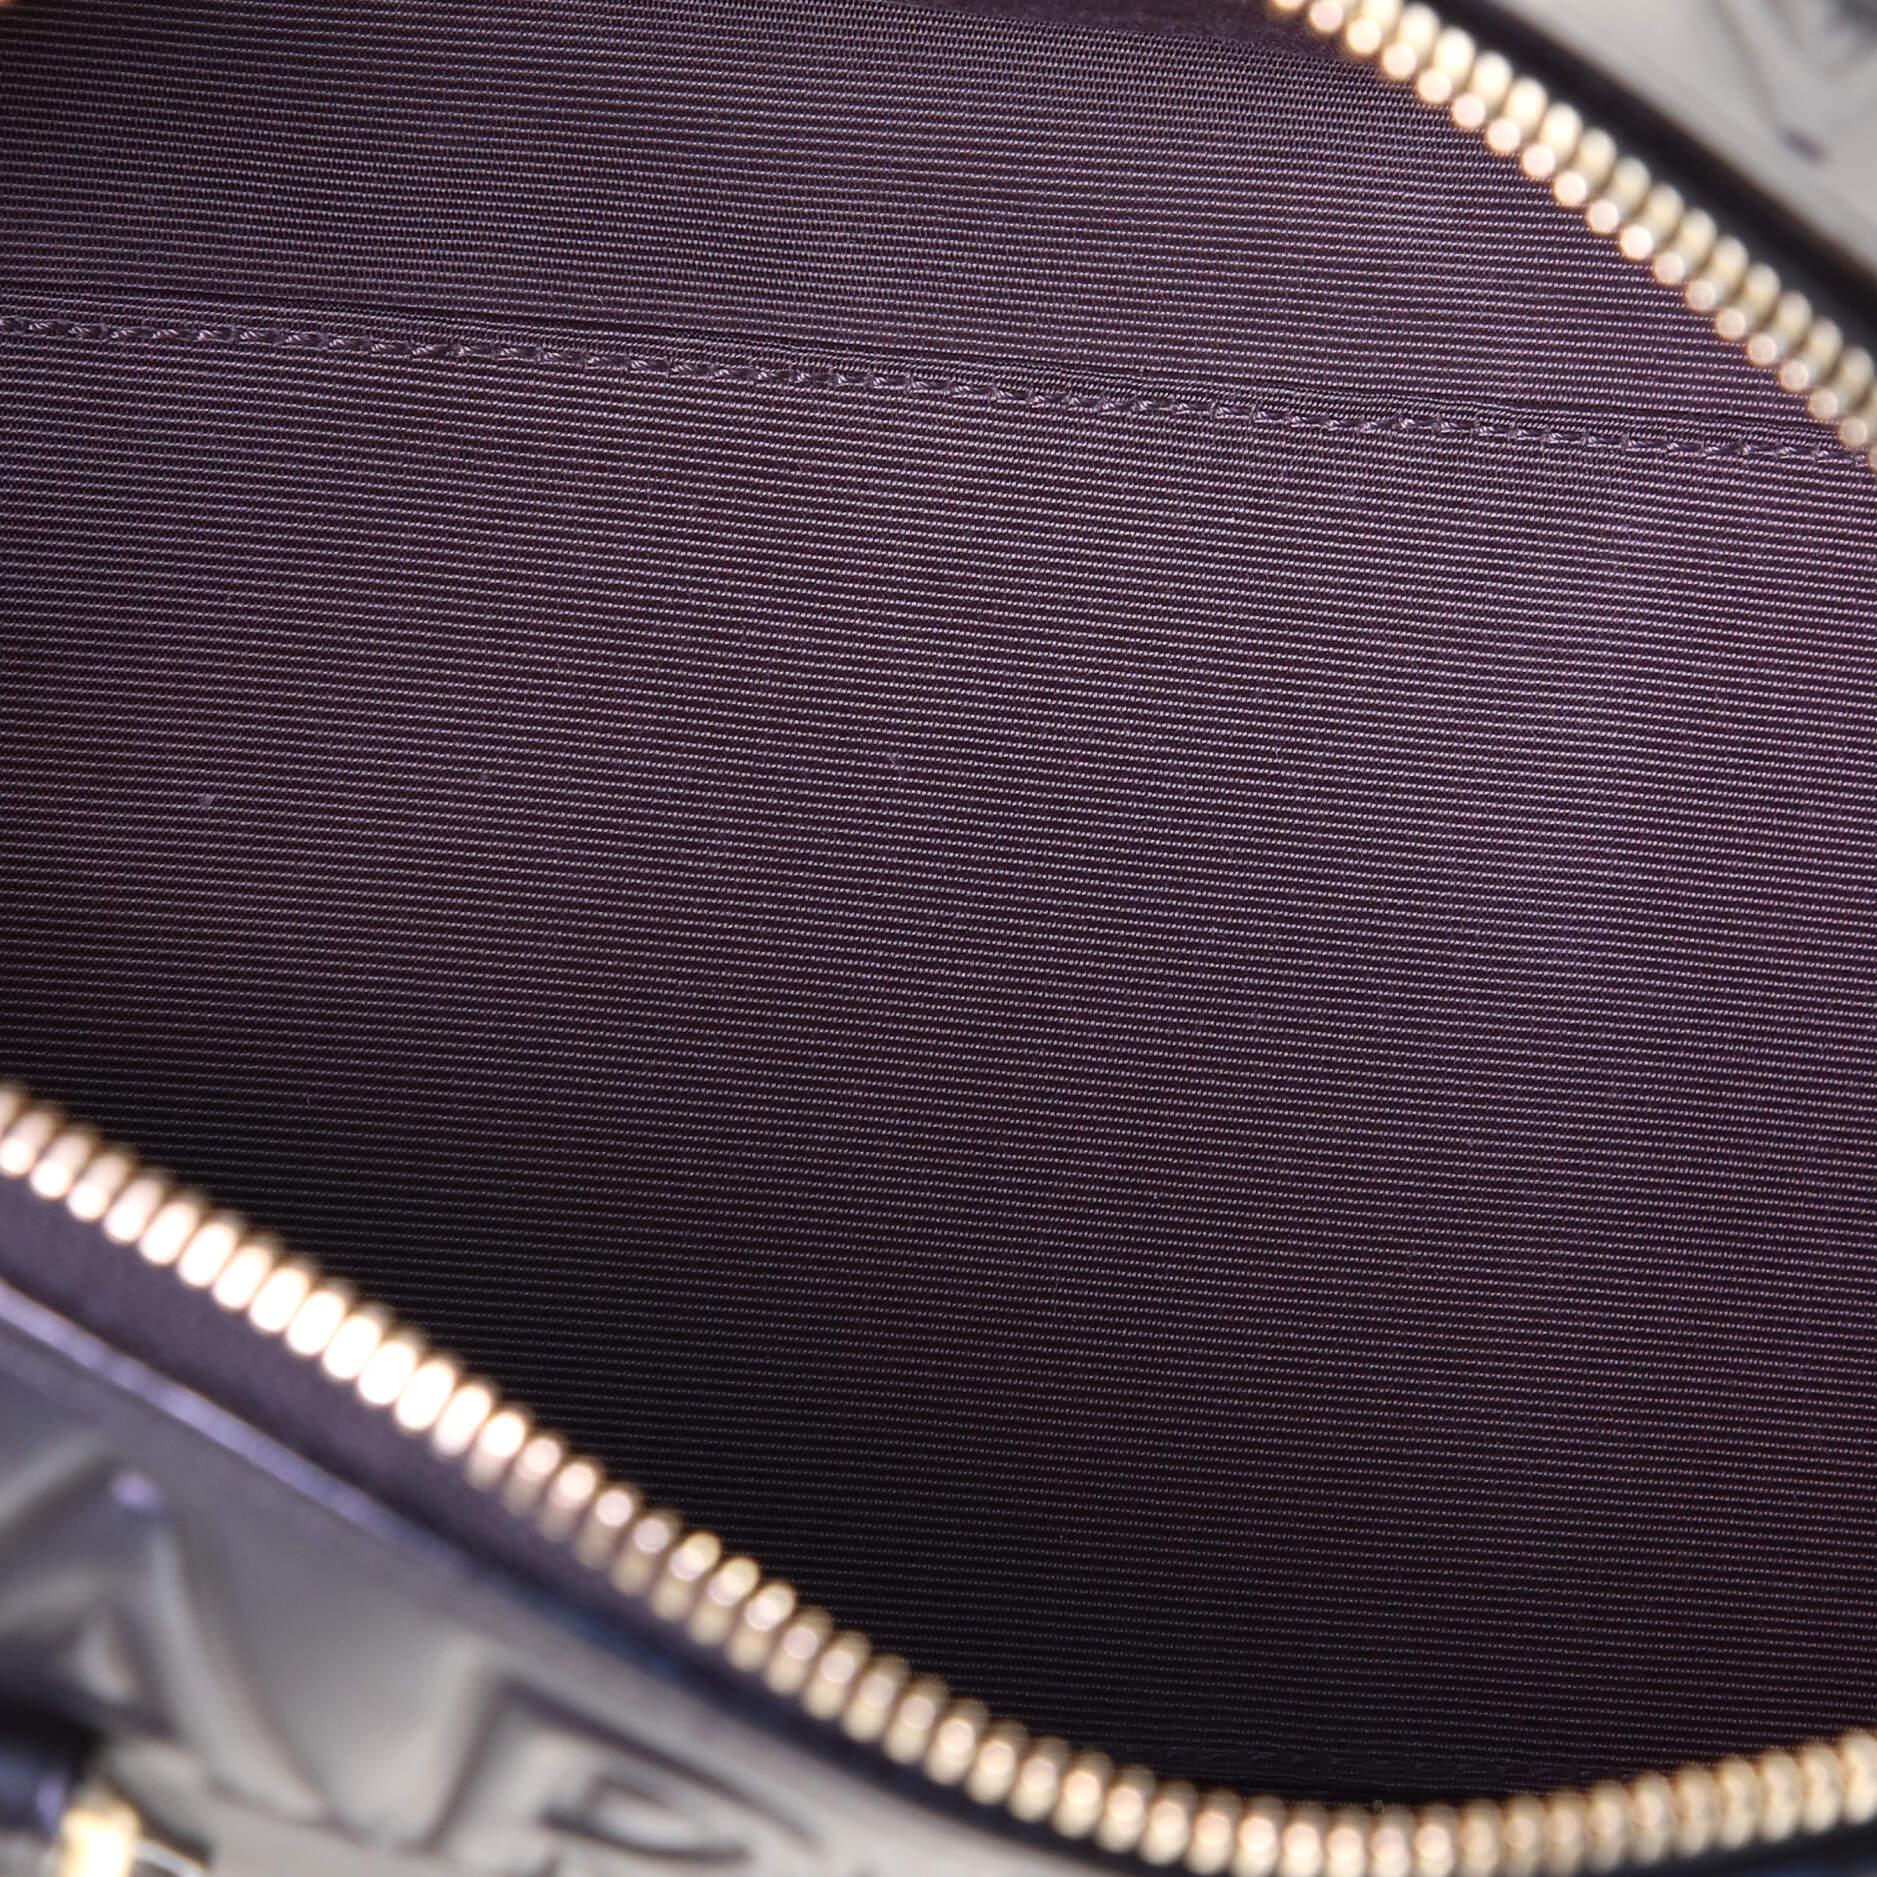 Women's or Men's Louis Vuitton Paris Speedy Cube Bag Embossed Leather Mini